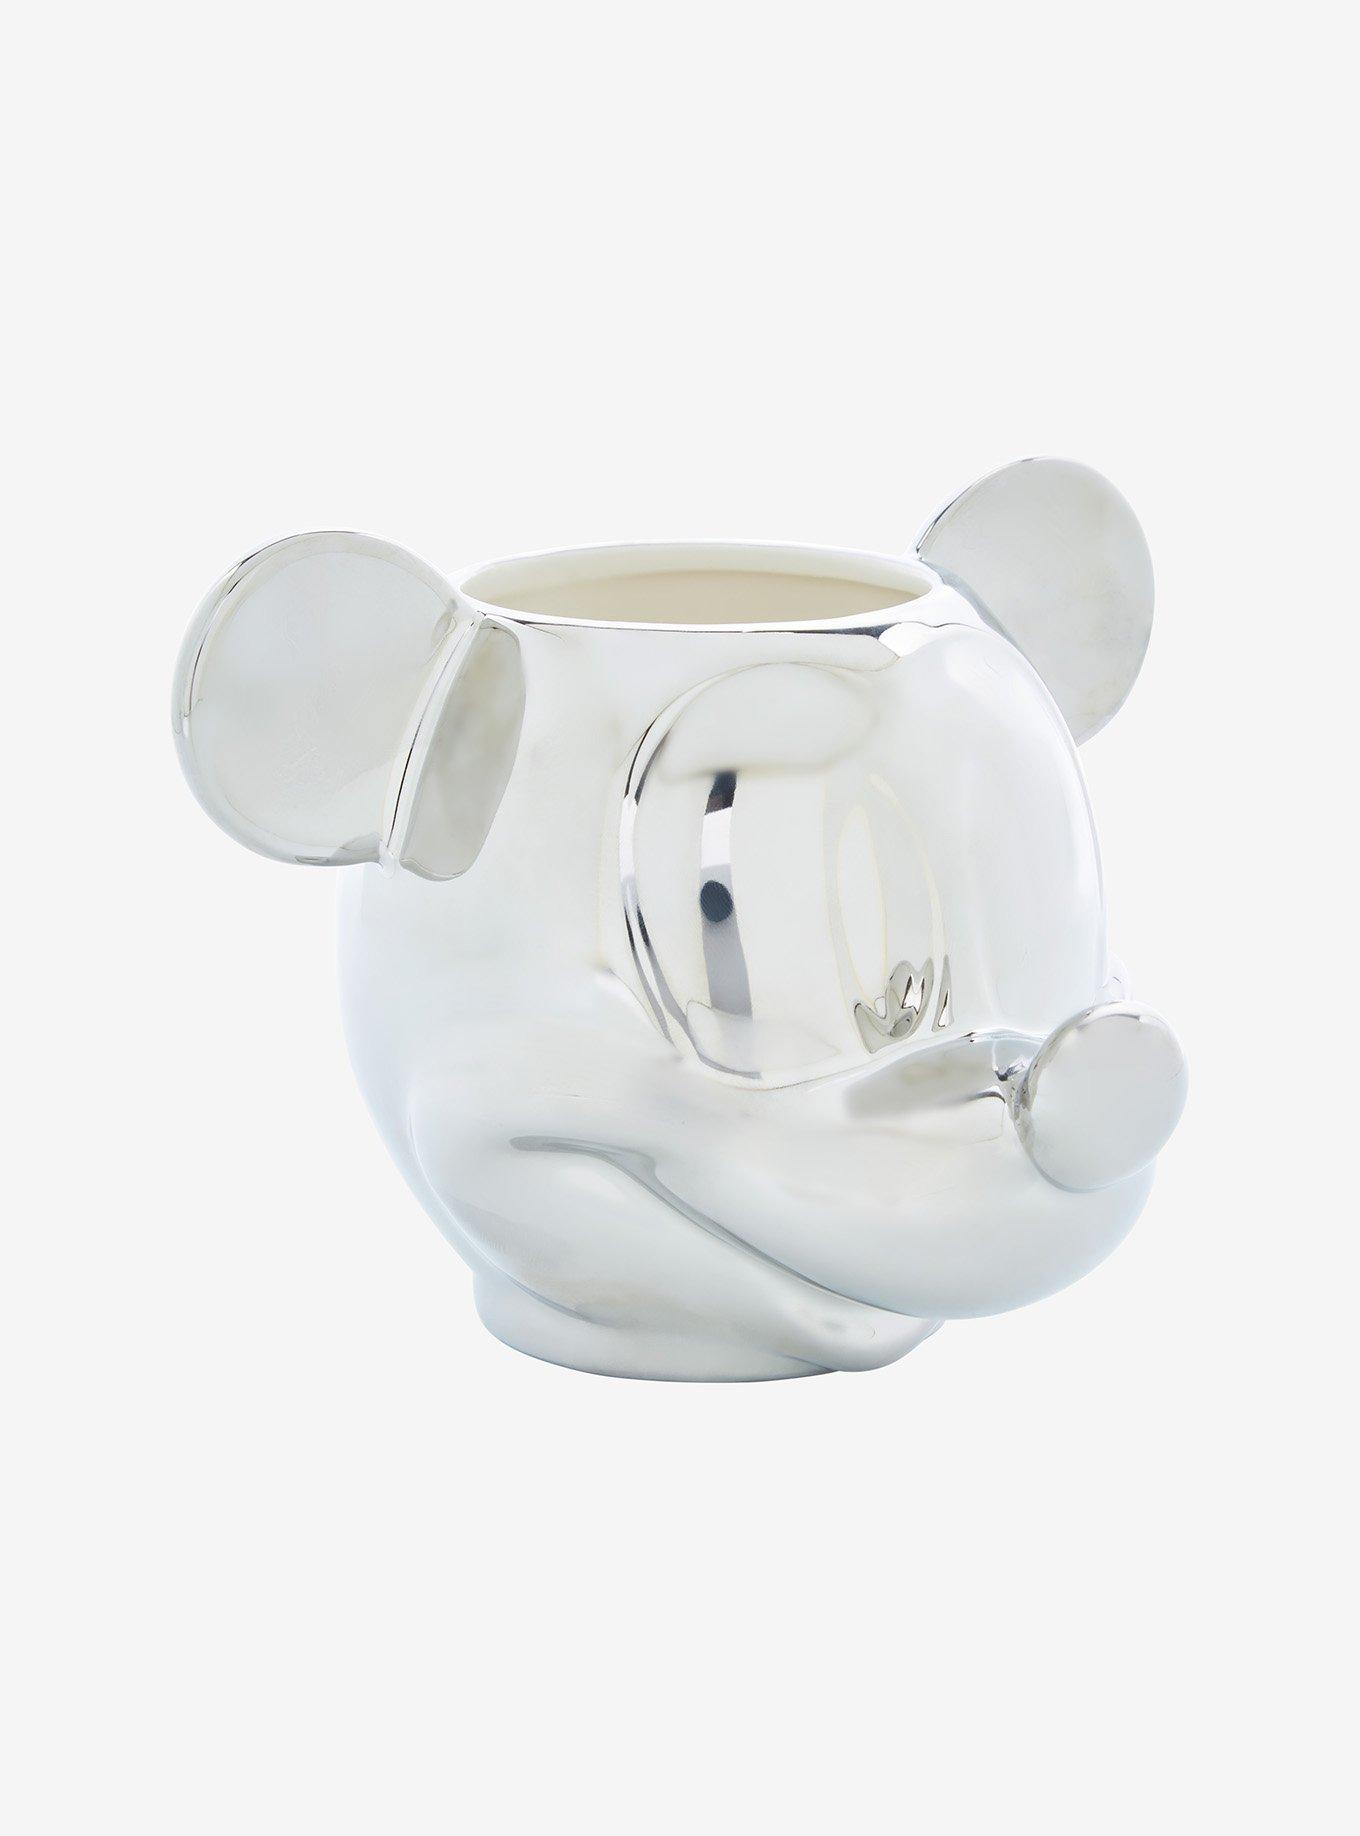 Disney Parks Star Wars The Mandalorian Baby Yoda Mug The Child Figural Mug  Cup